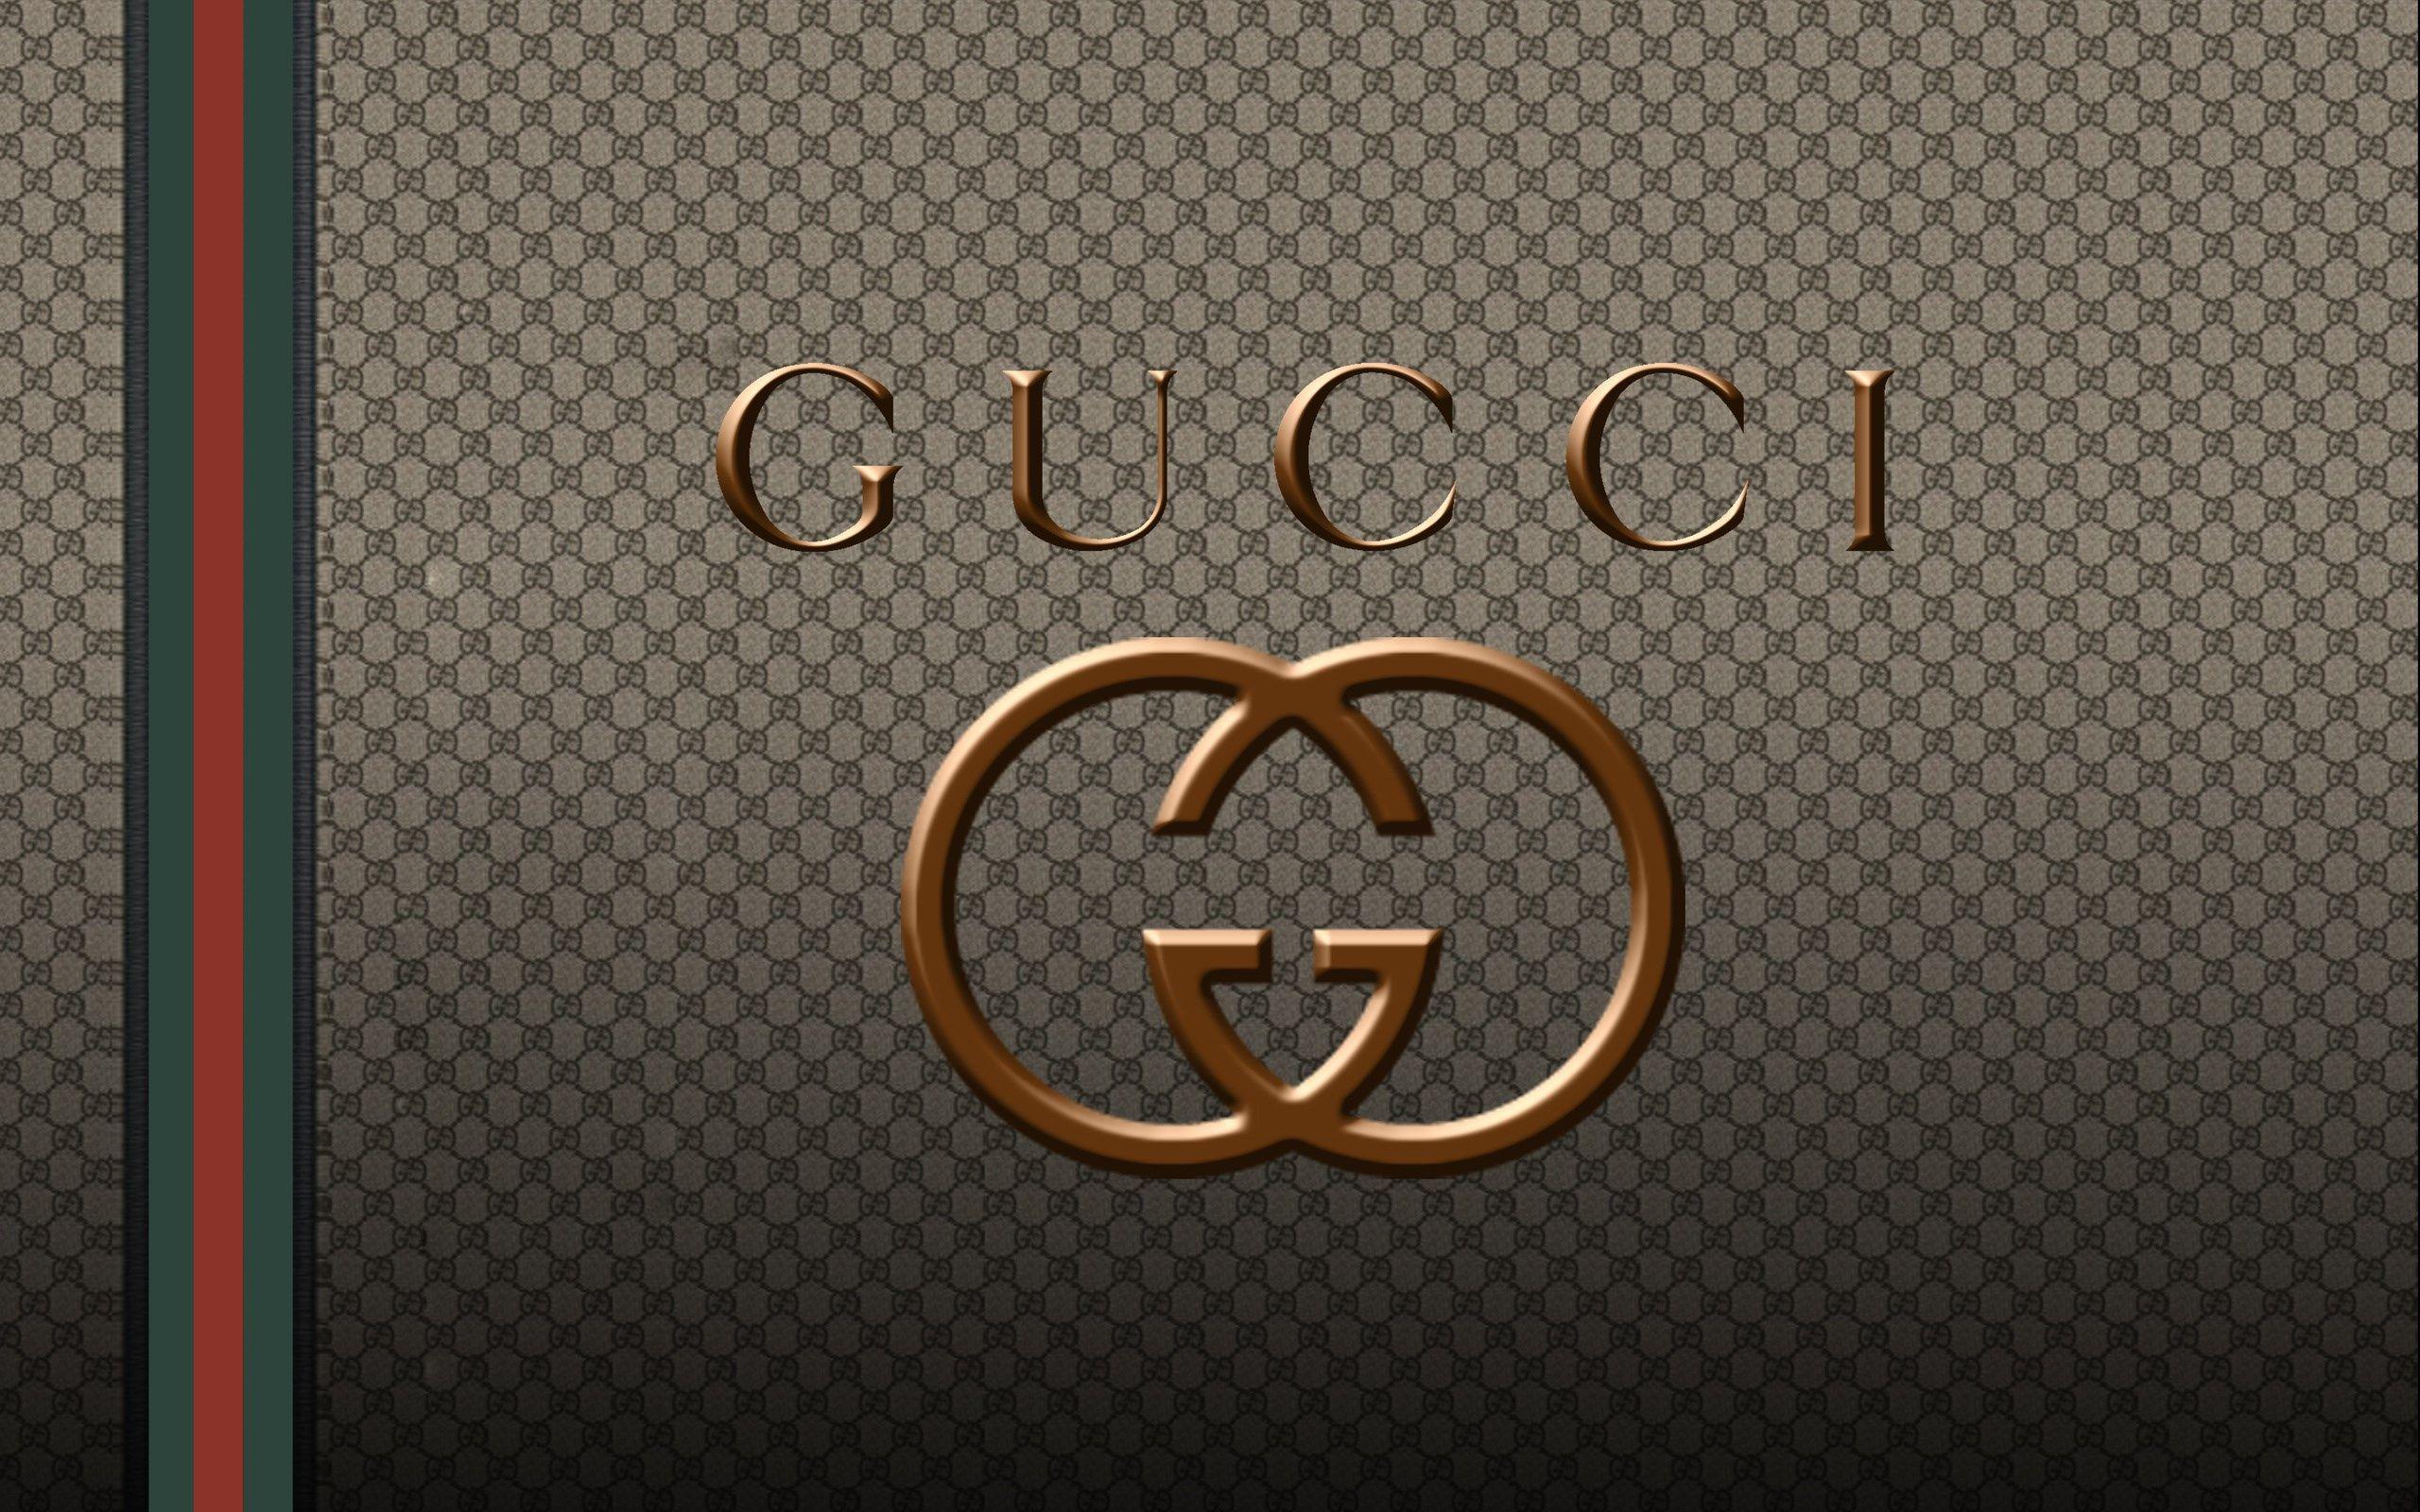 gucci logo hd